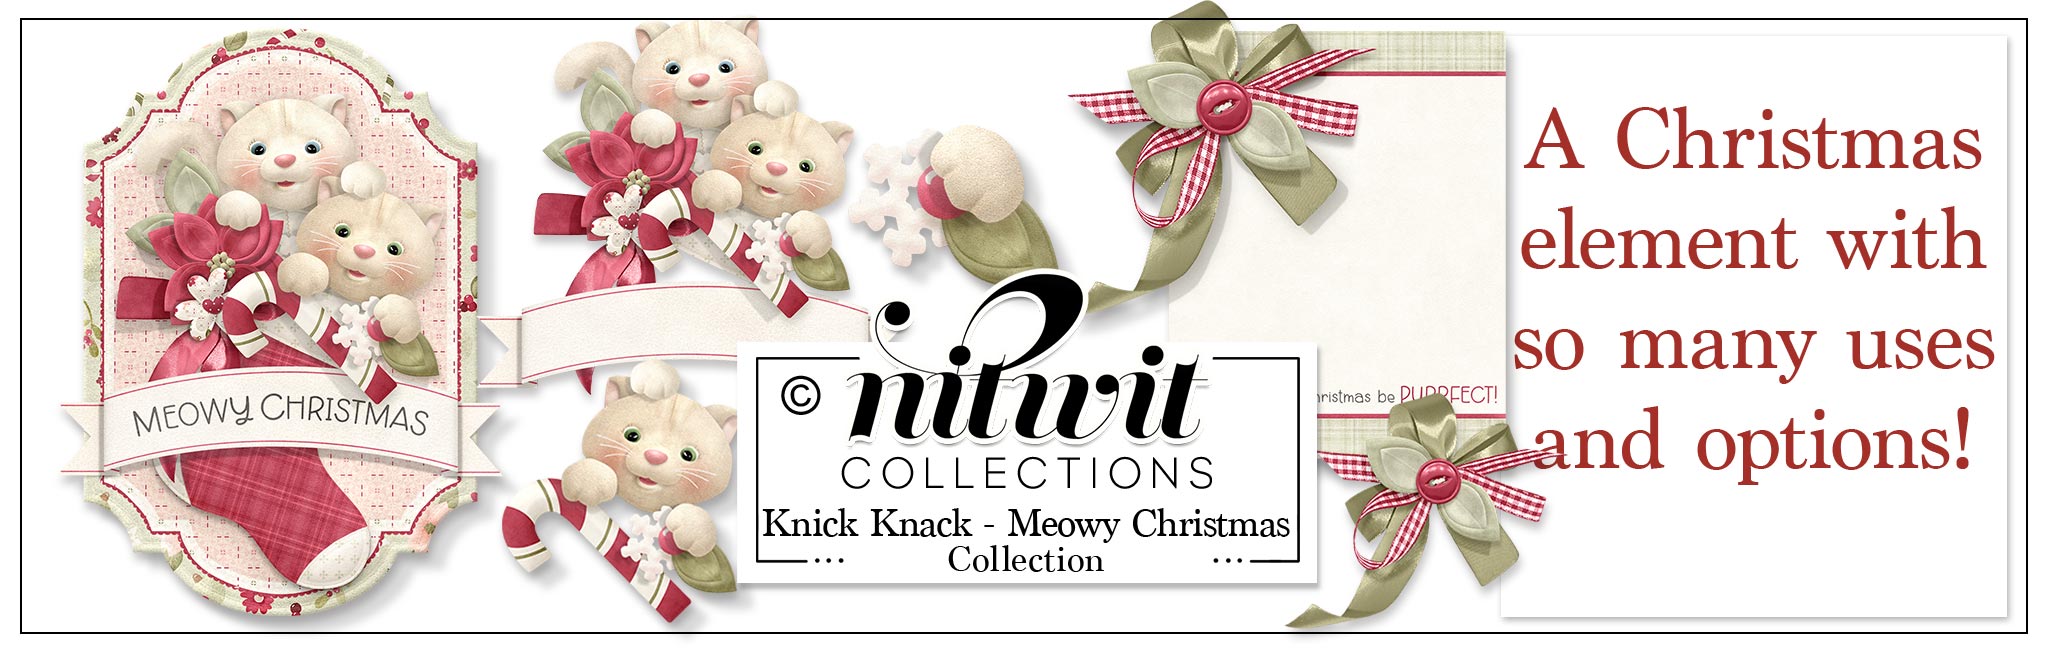 Knick Knack - Meowy Christmas